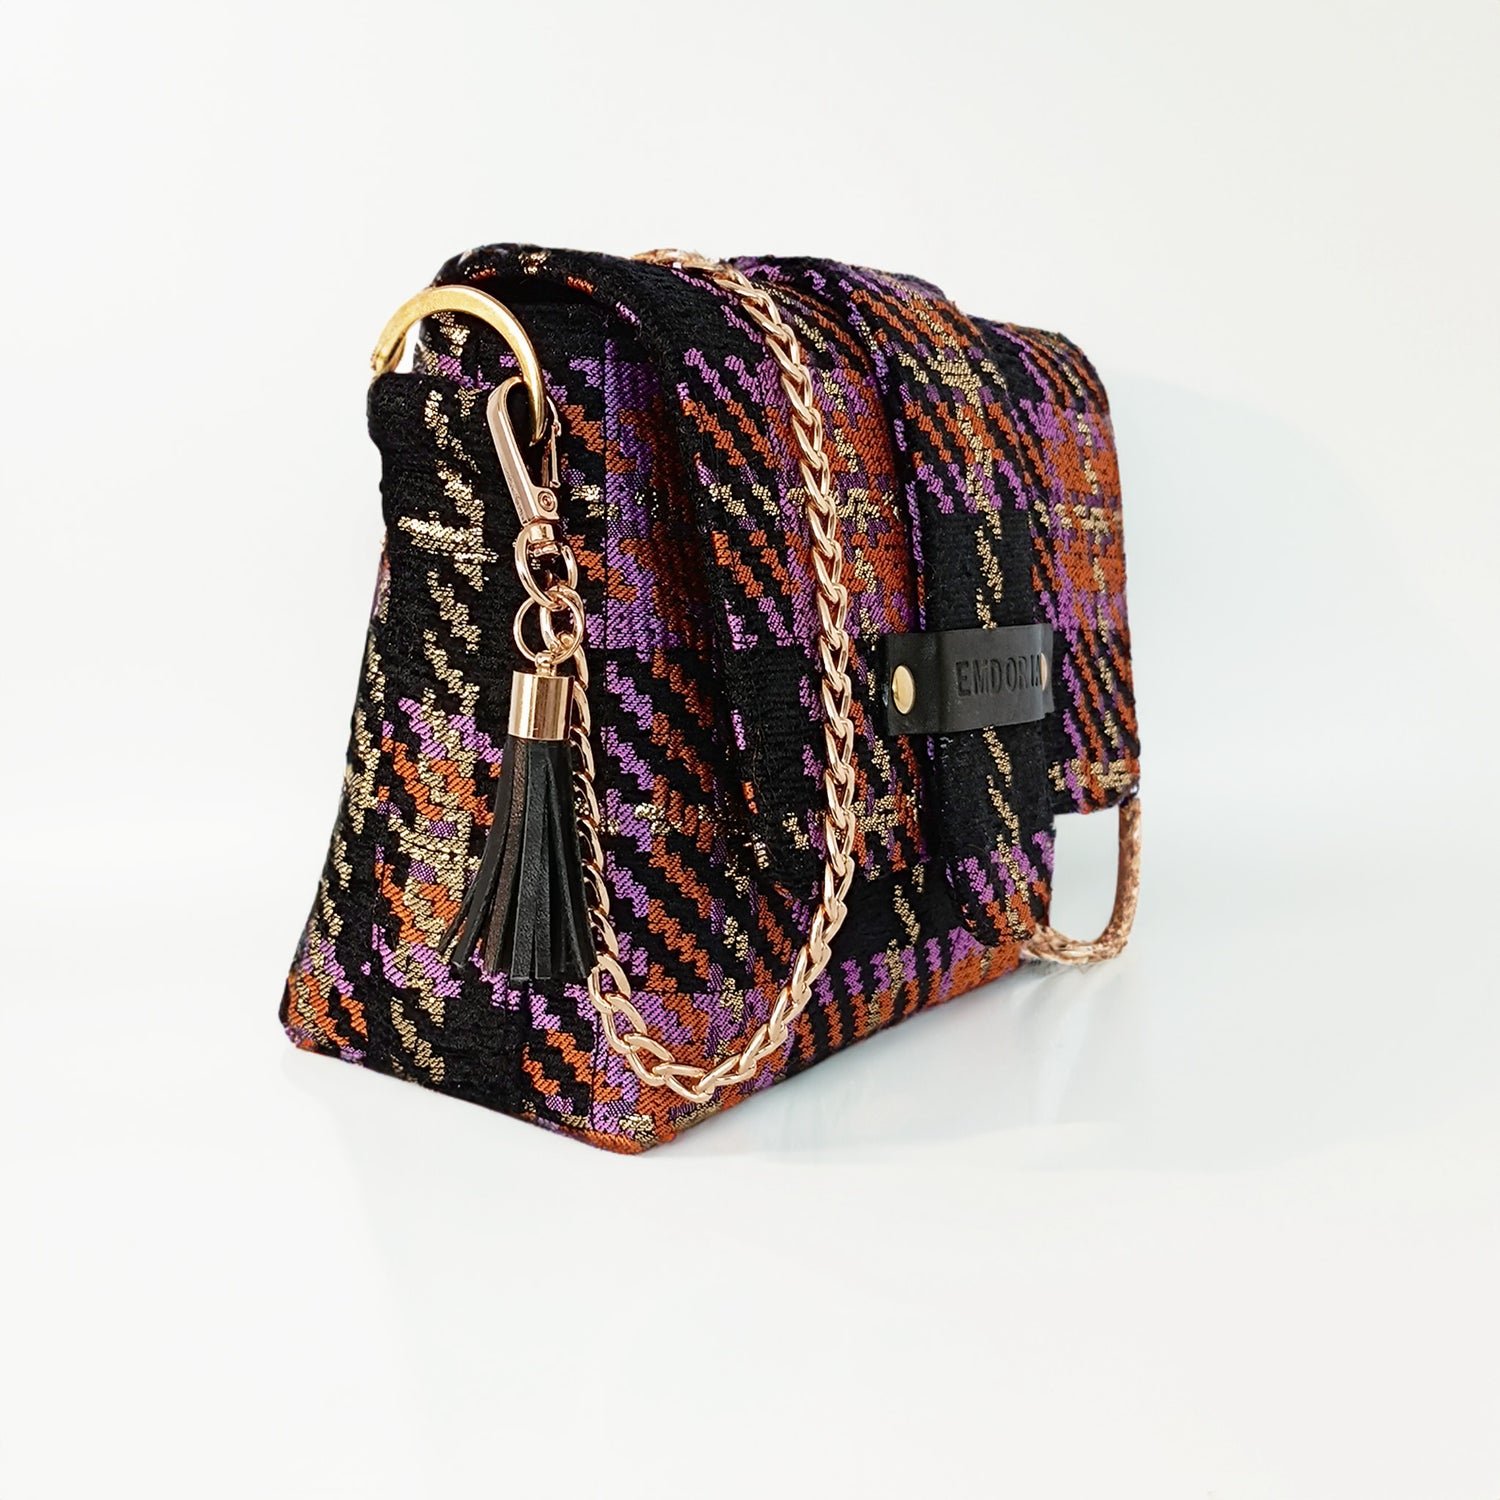 Mini Sac bandoulière en tissu tartan écossais-Sacs à main- bandouliere-cross bag hand bag-hand cross bag-EMDORIA PARIS